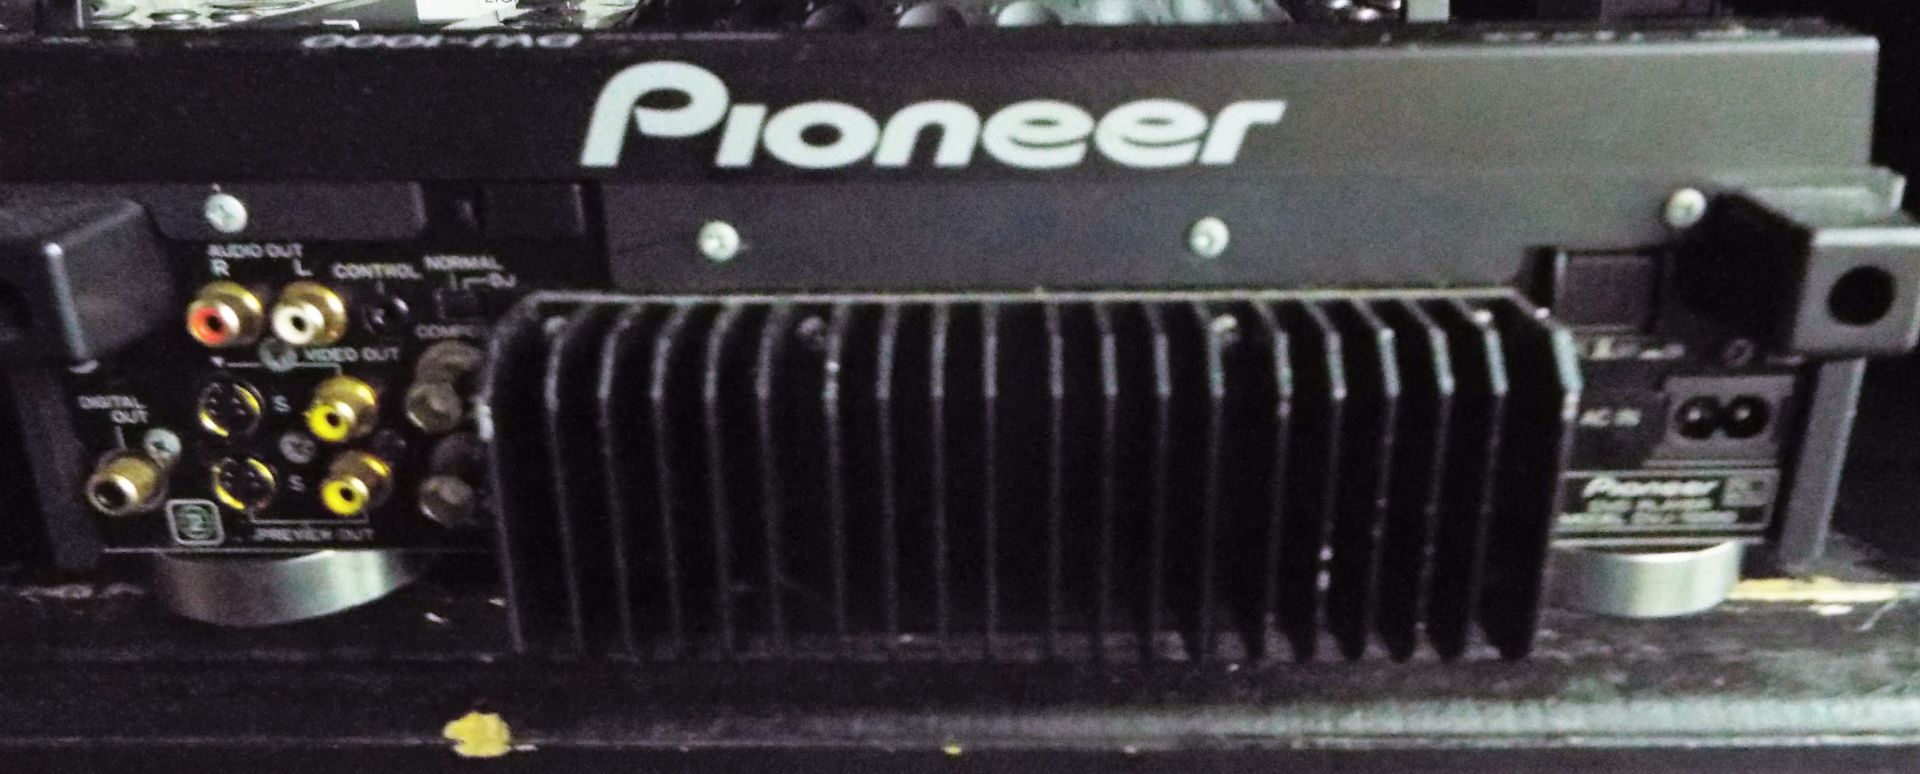 Pioneer DVJ 1000 Professional Sound Decks - Image 8 of 12